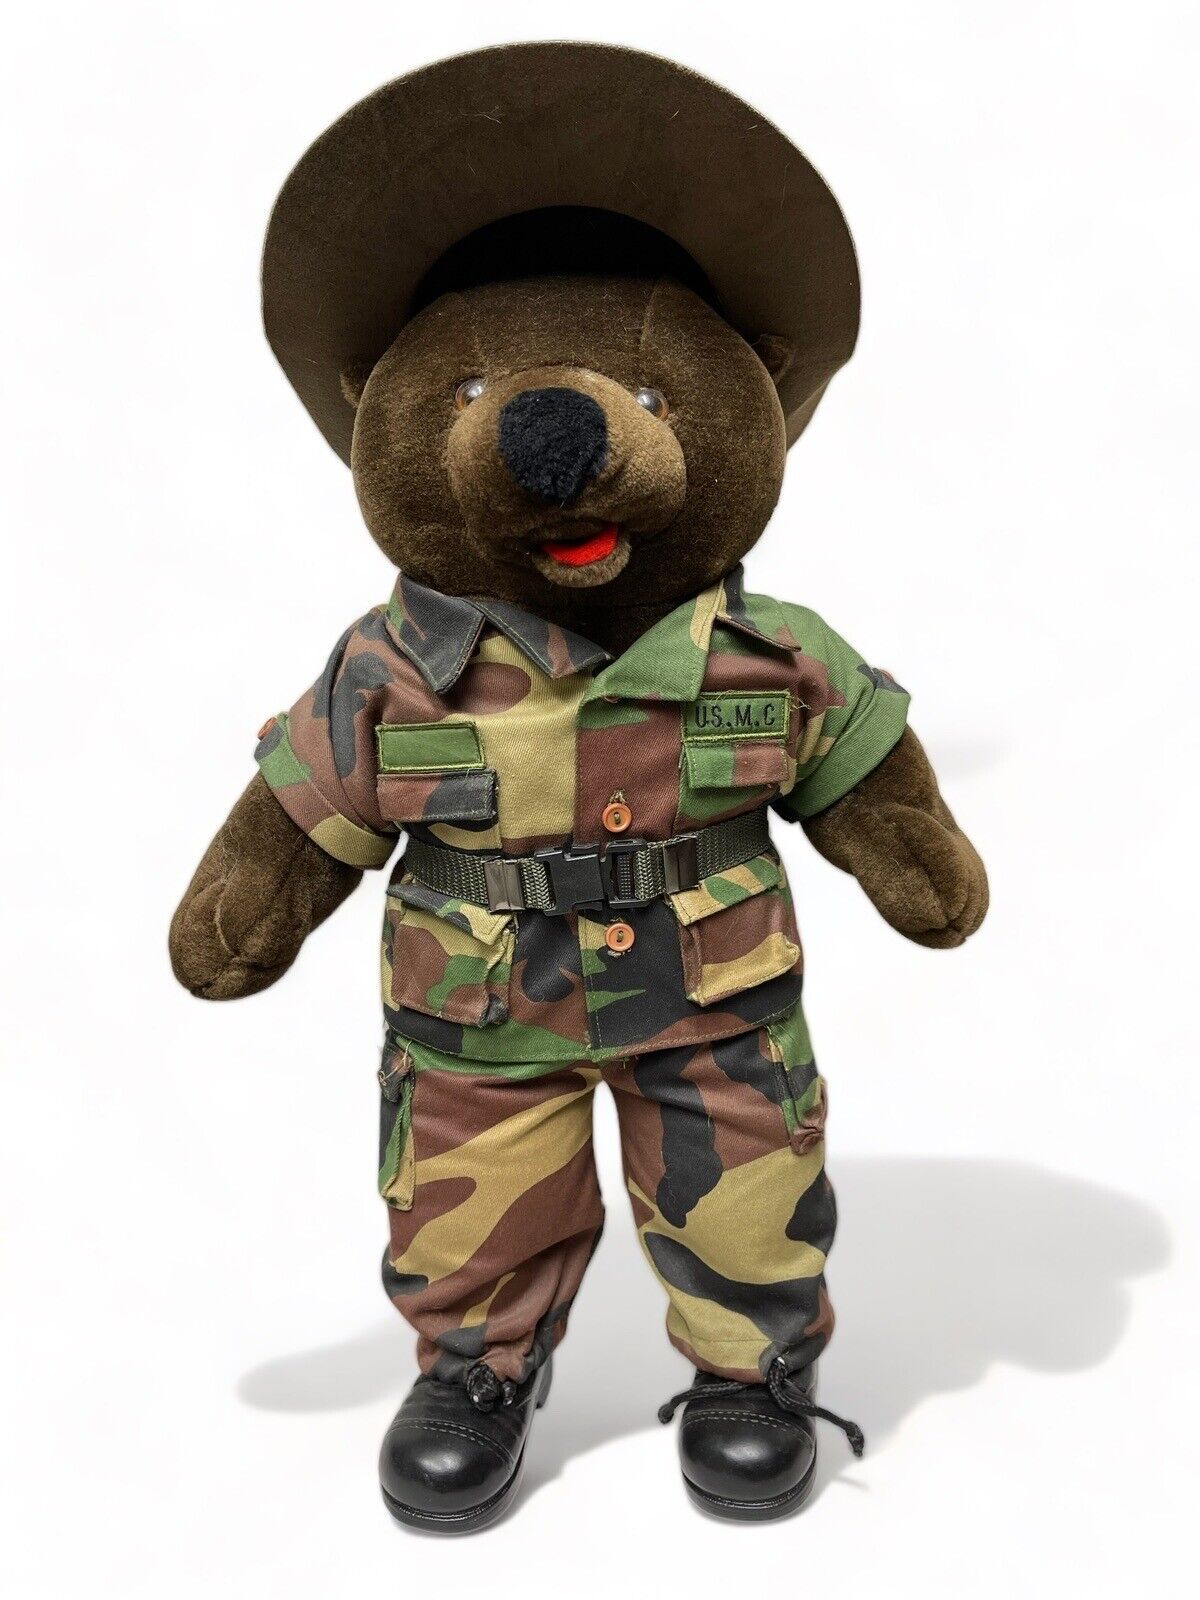 1989 USMC Teddy Bear - Marine Green Camo Fatigues & Boots Collectible 20 Inches